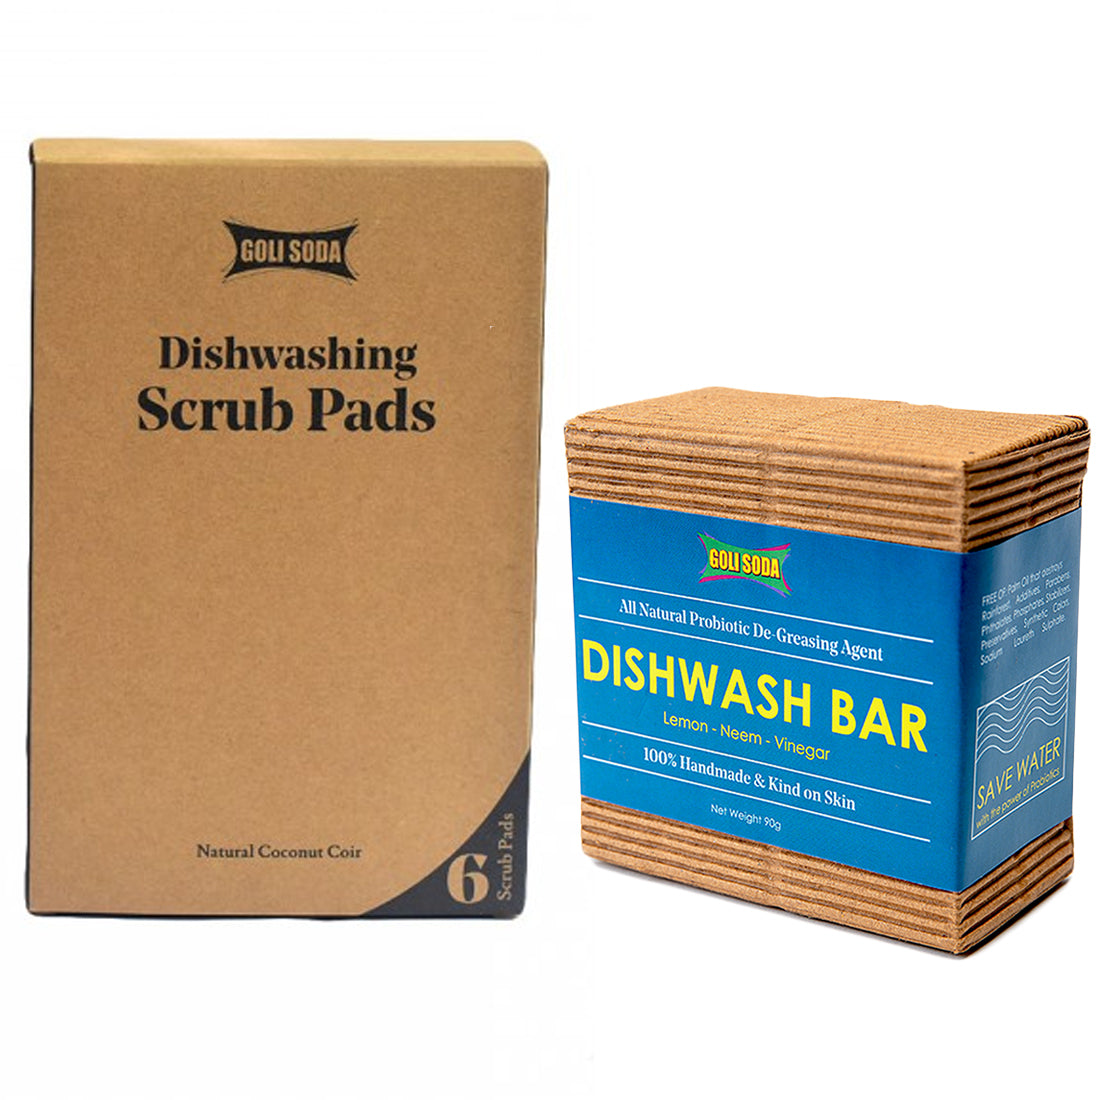 Coconut Coir Scrub And Probiotic Dishwash Bar (90 grams) - Exclusive Combo